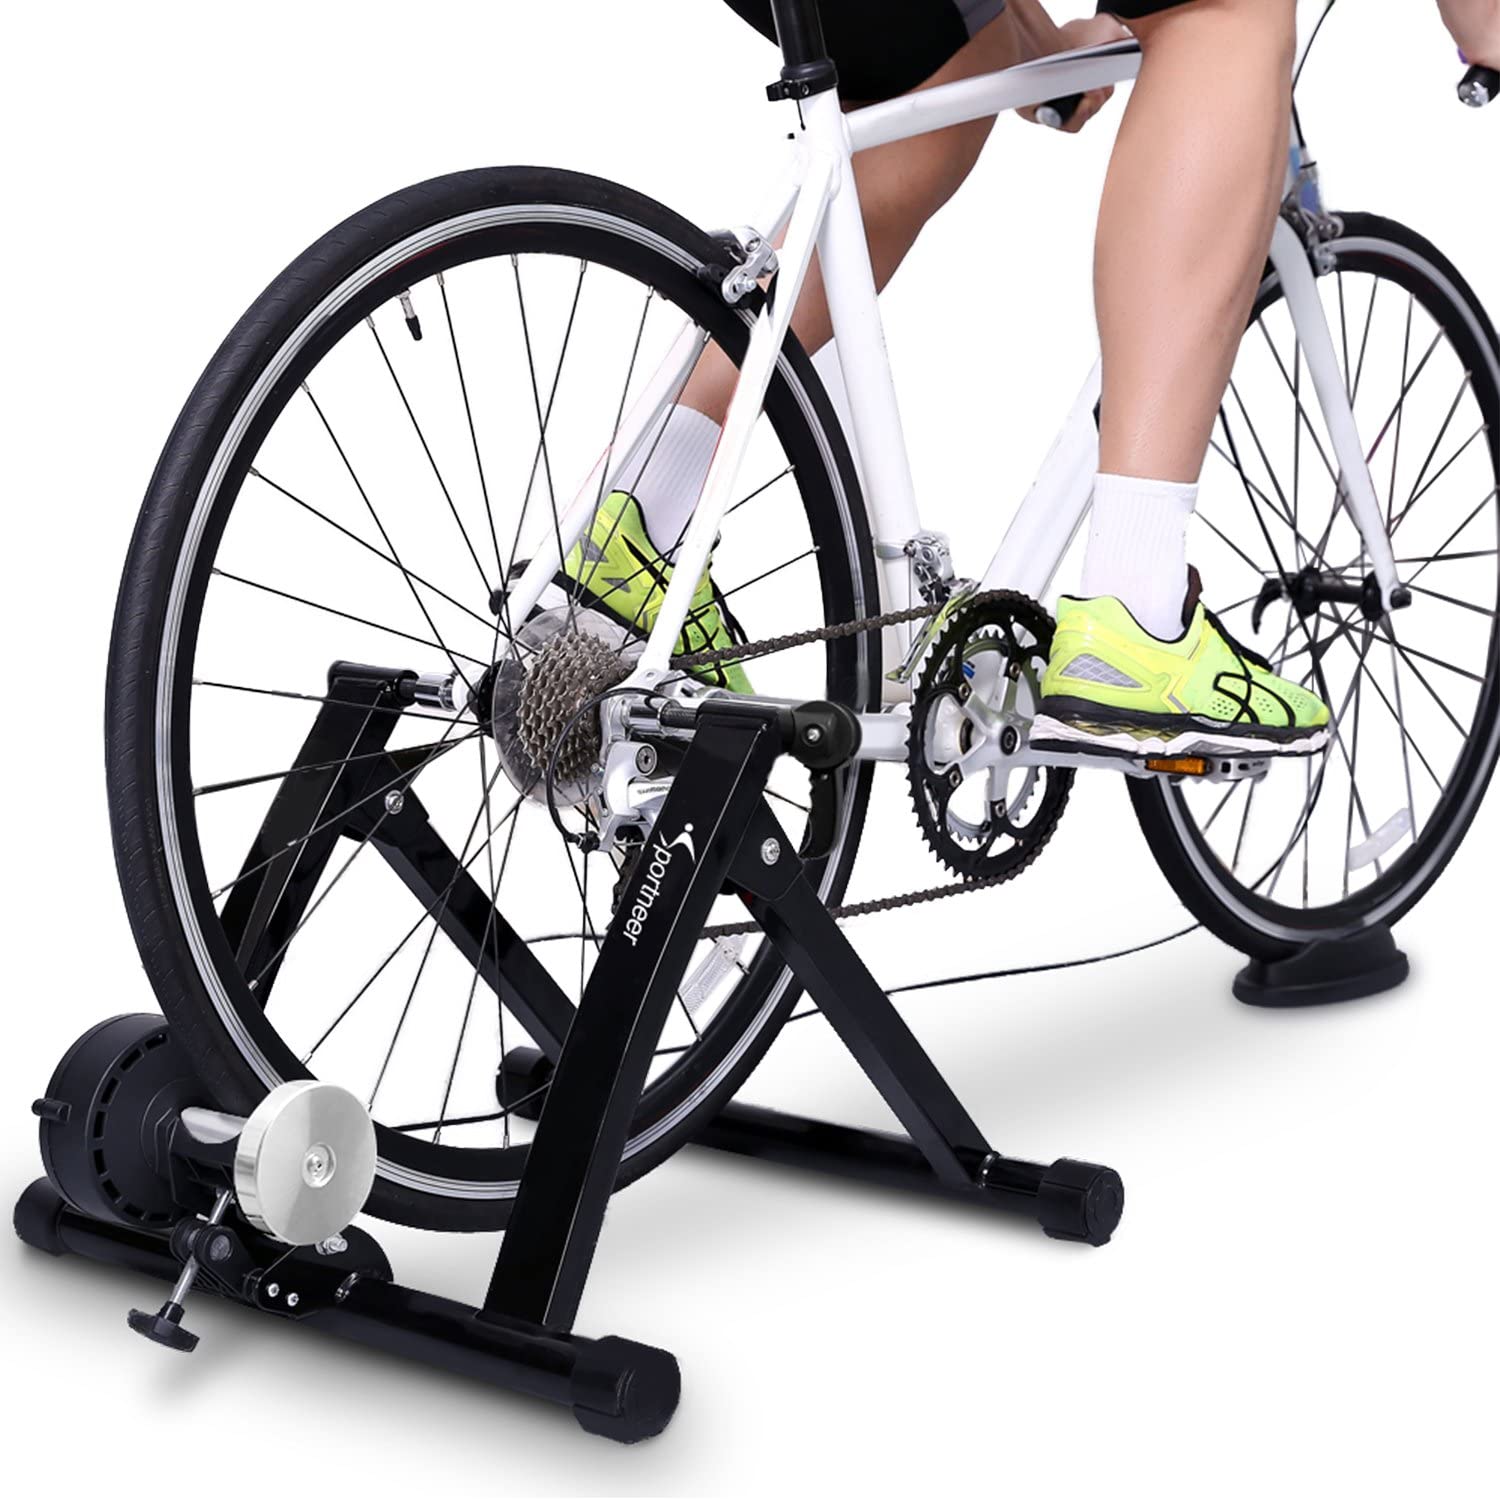 Vertrek naar levering Productie Sportneer Magnetic Stationary Bicycle Exercise Stand